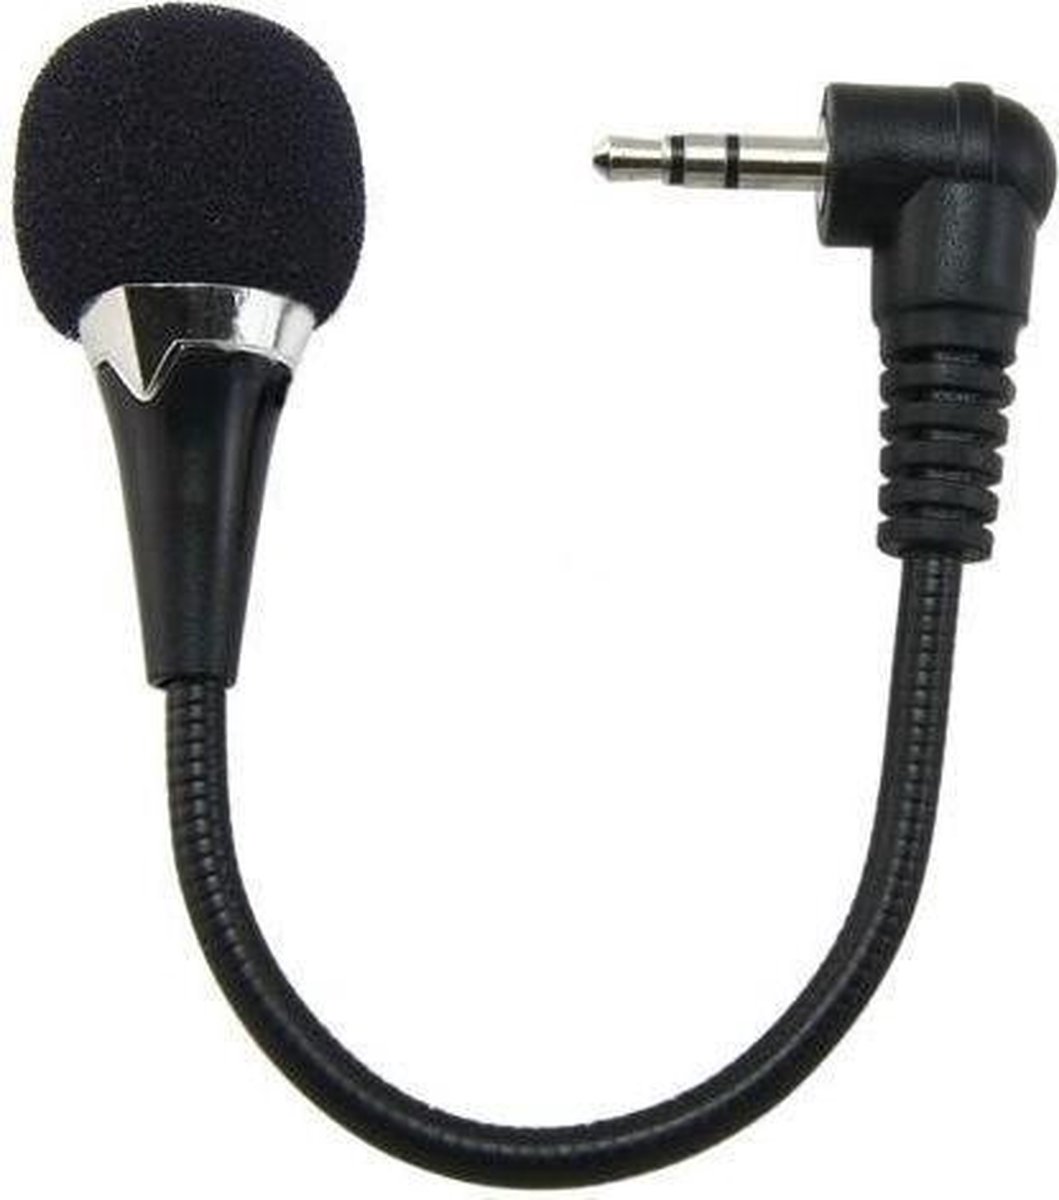 vreugde Industrieel Vakantie Mini Microfoon voor PC en Laptop 3.5mm mic jack aansluiting | bol.com